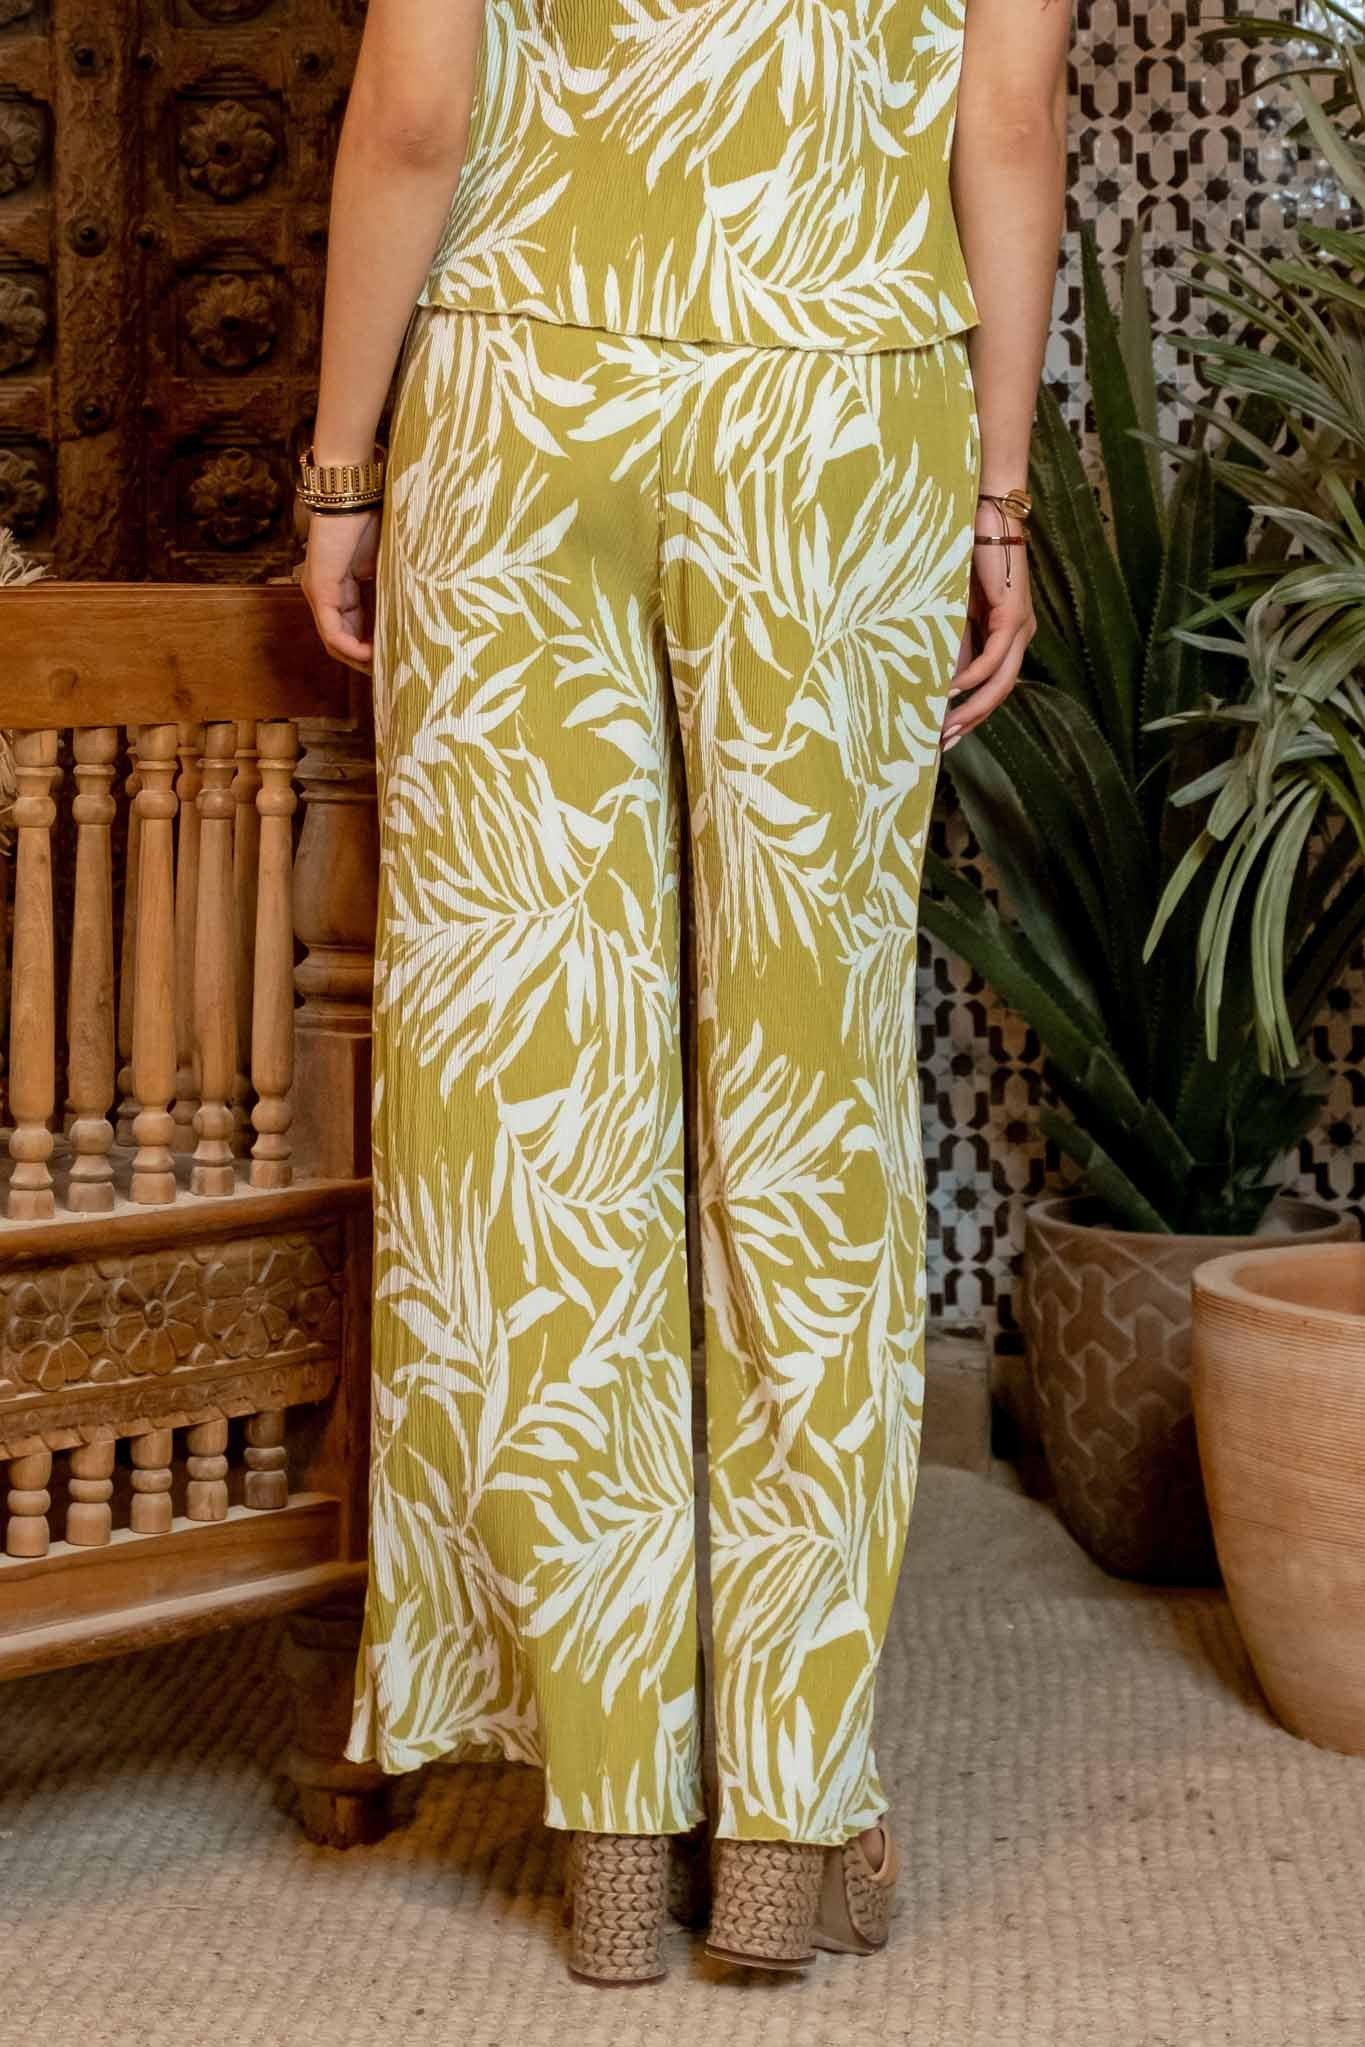 The Kanoah Leaf Top + Pants Set - Sold Separately